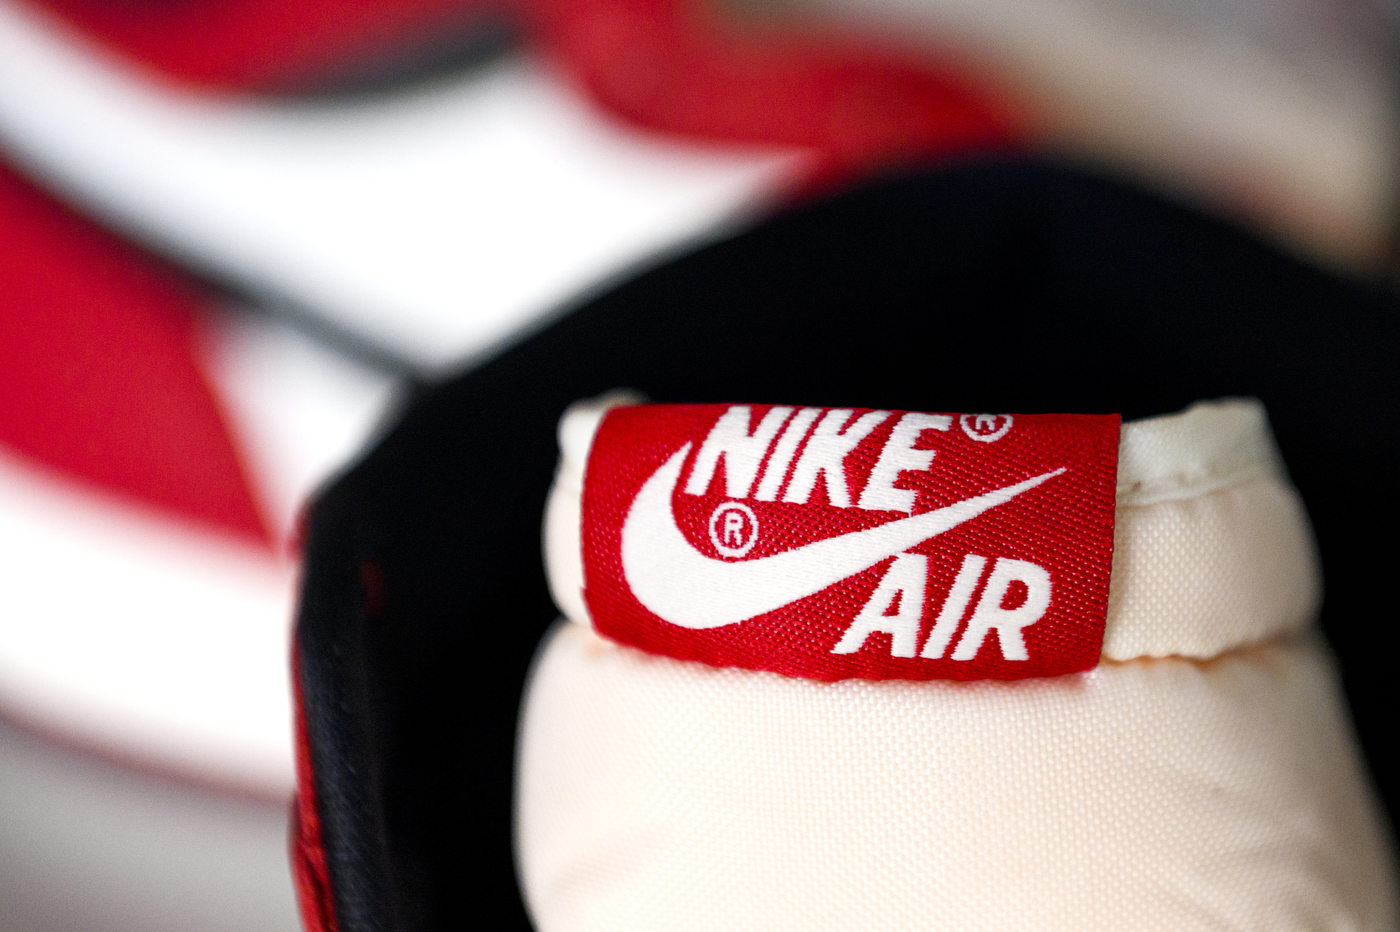 Nike Air branding on shoes